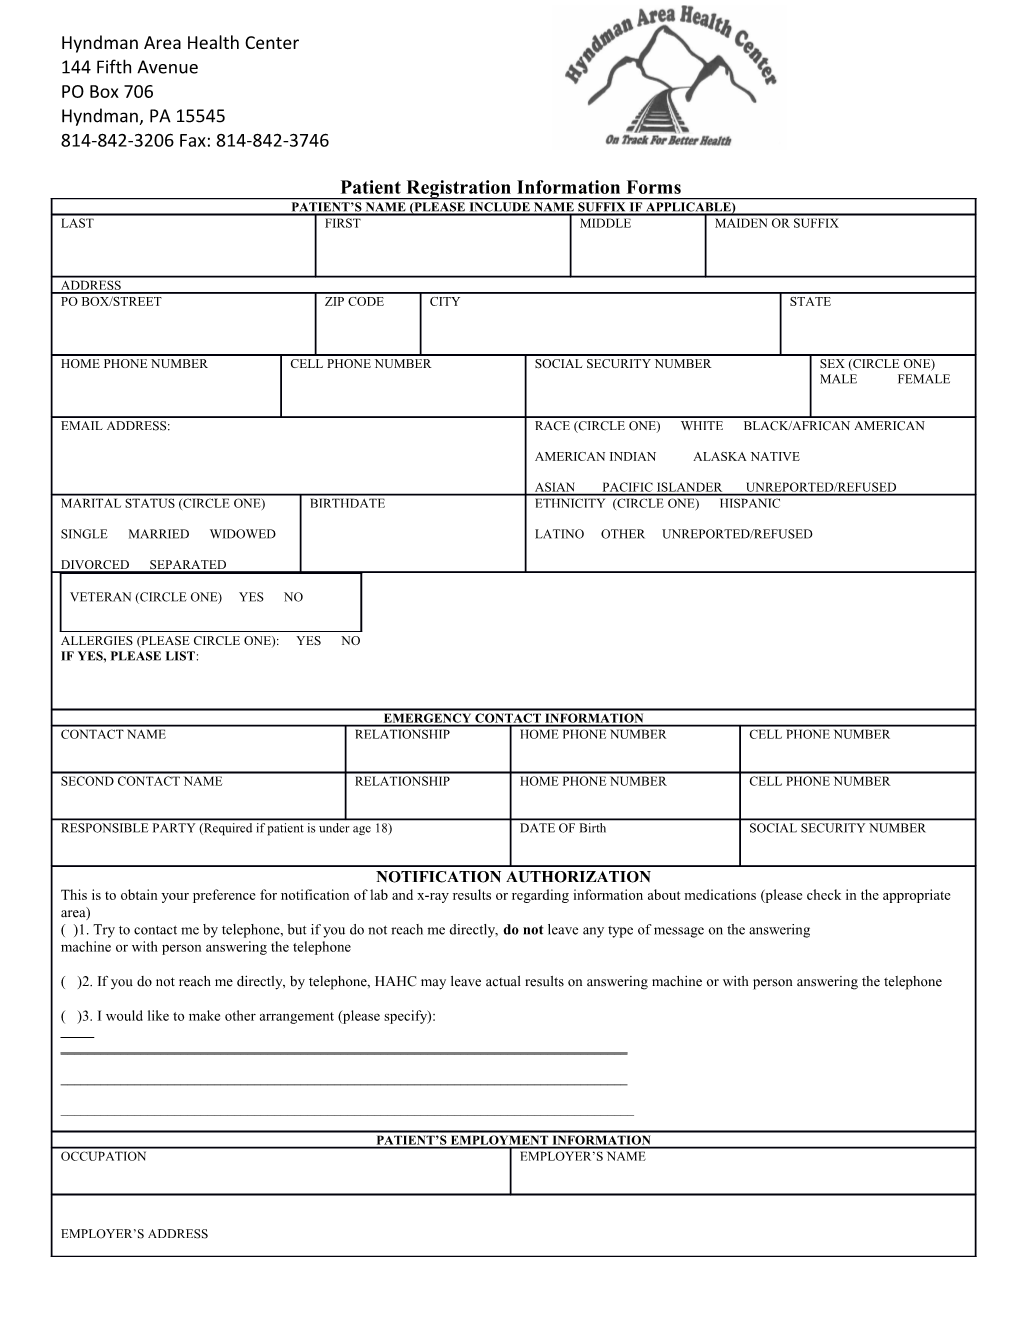 Patient Registration Information Forms